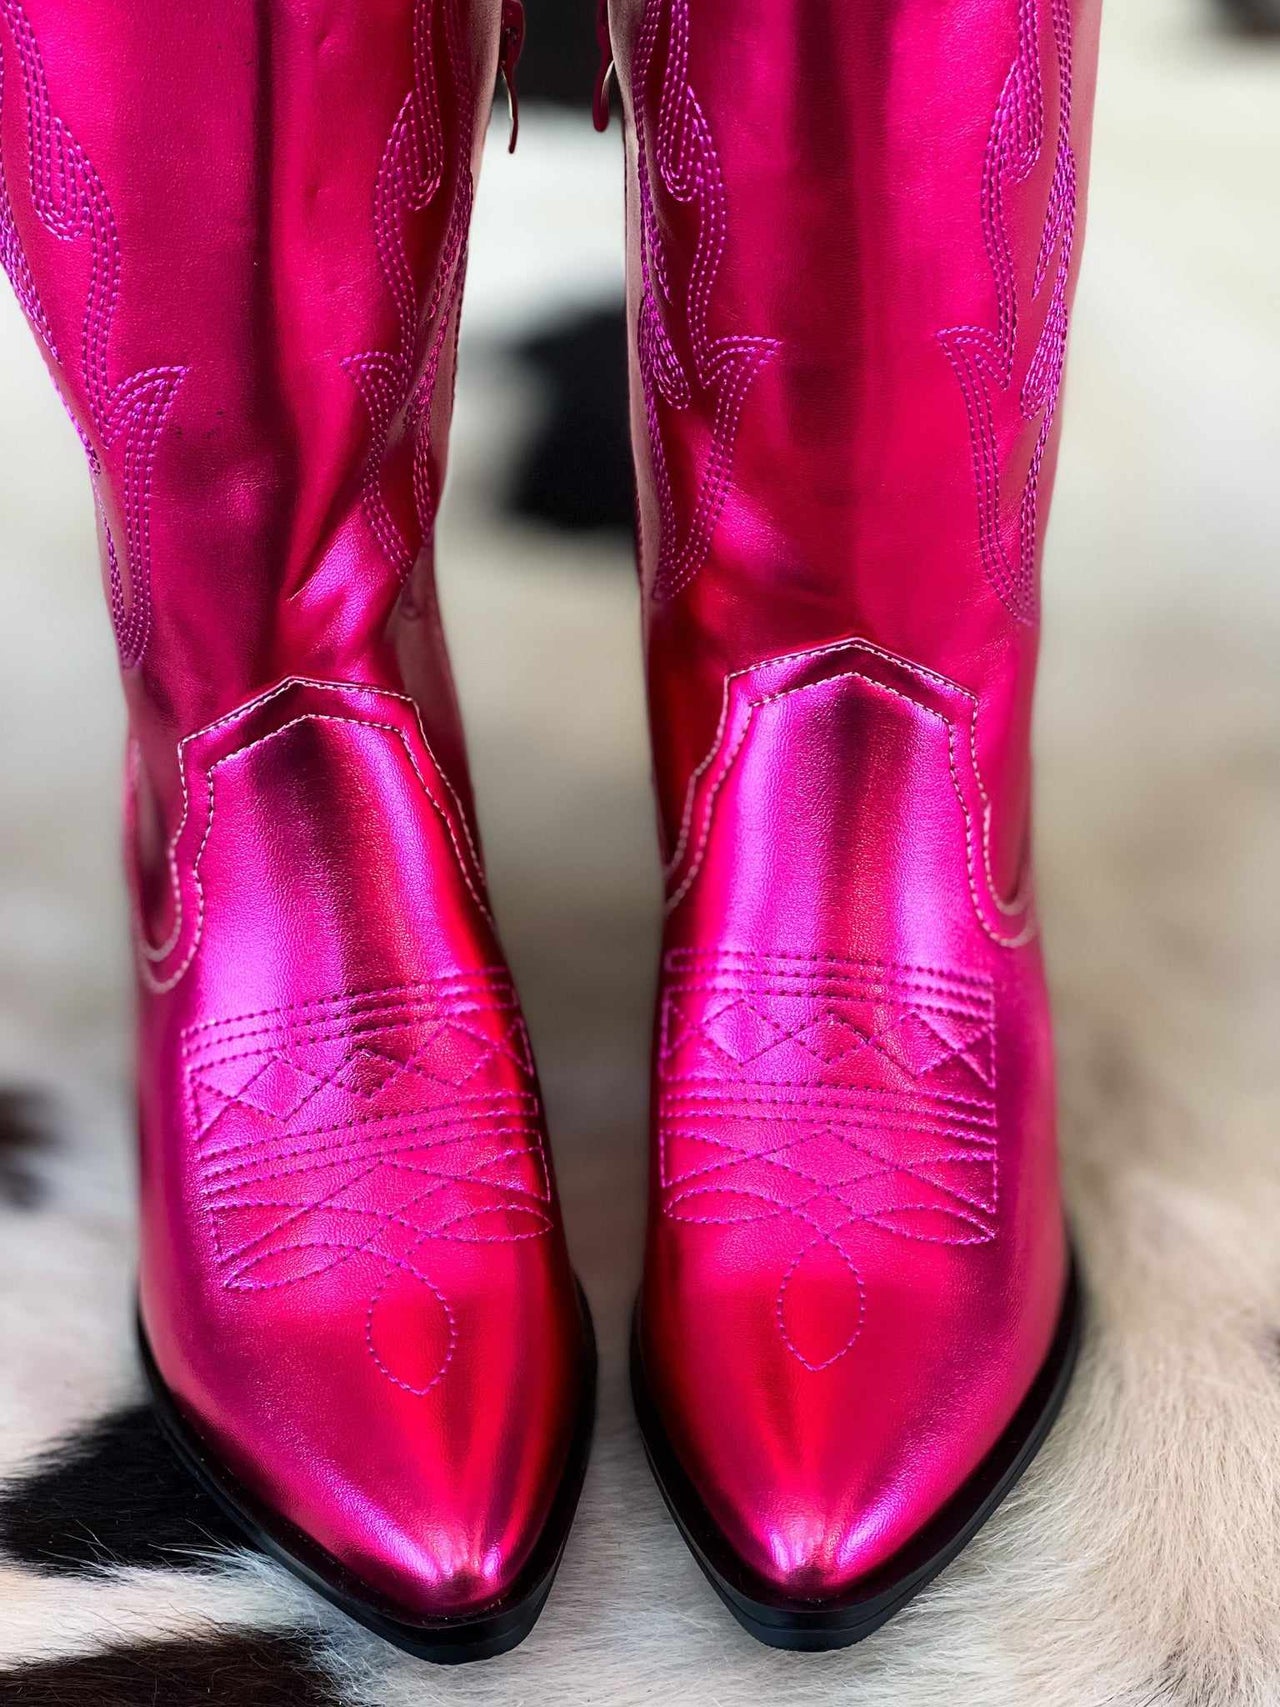 Metallic hot pink western boots.